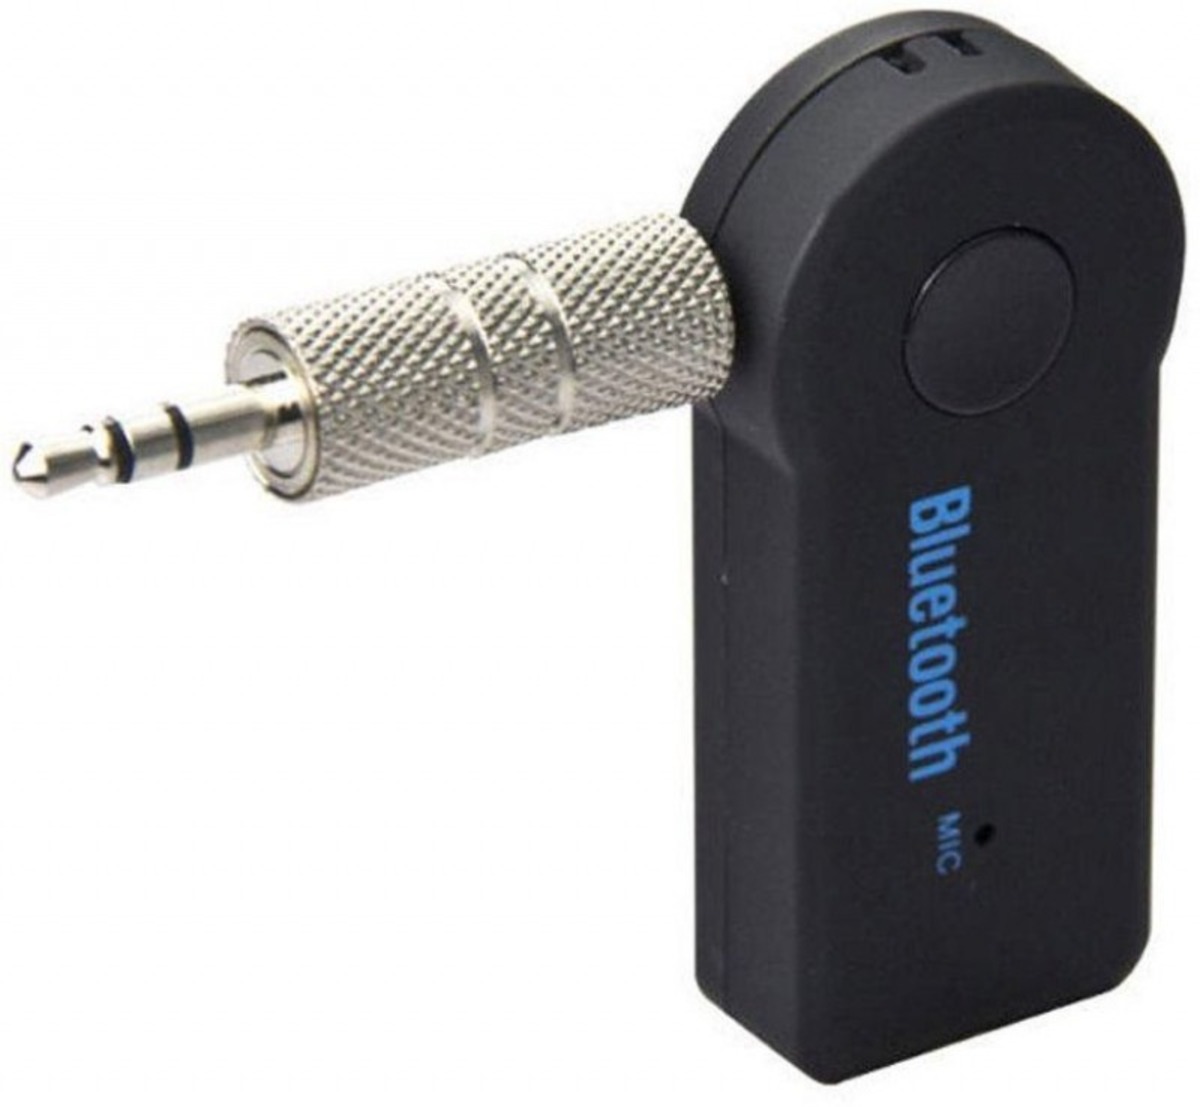 Bluetooth Microphone Adapter, Bluetooth Phone Adapter